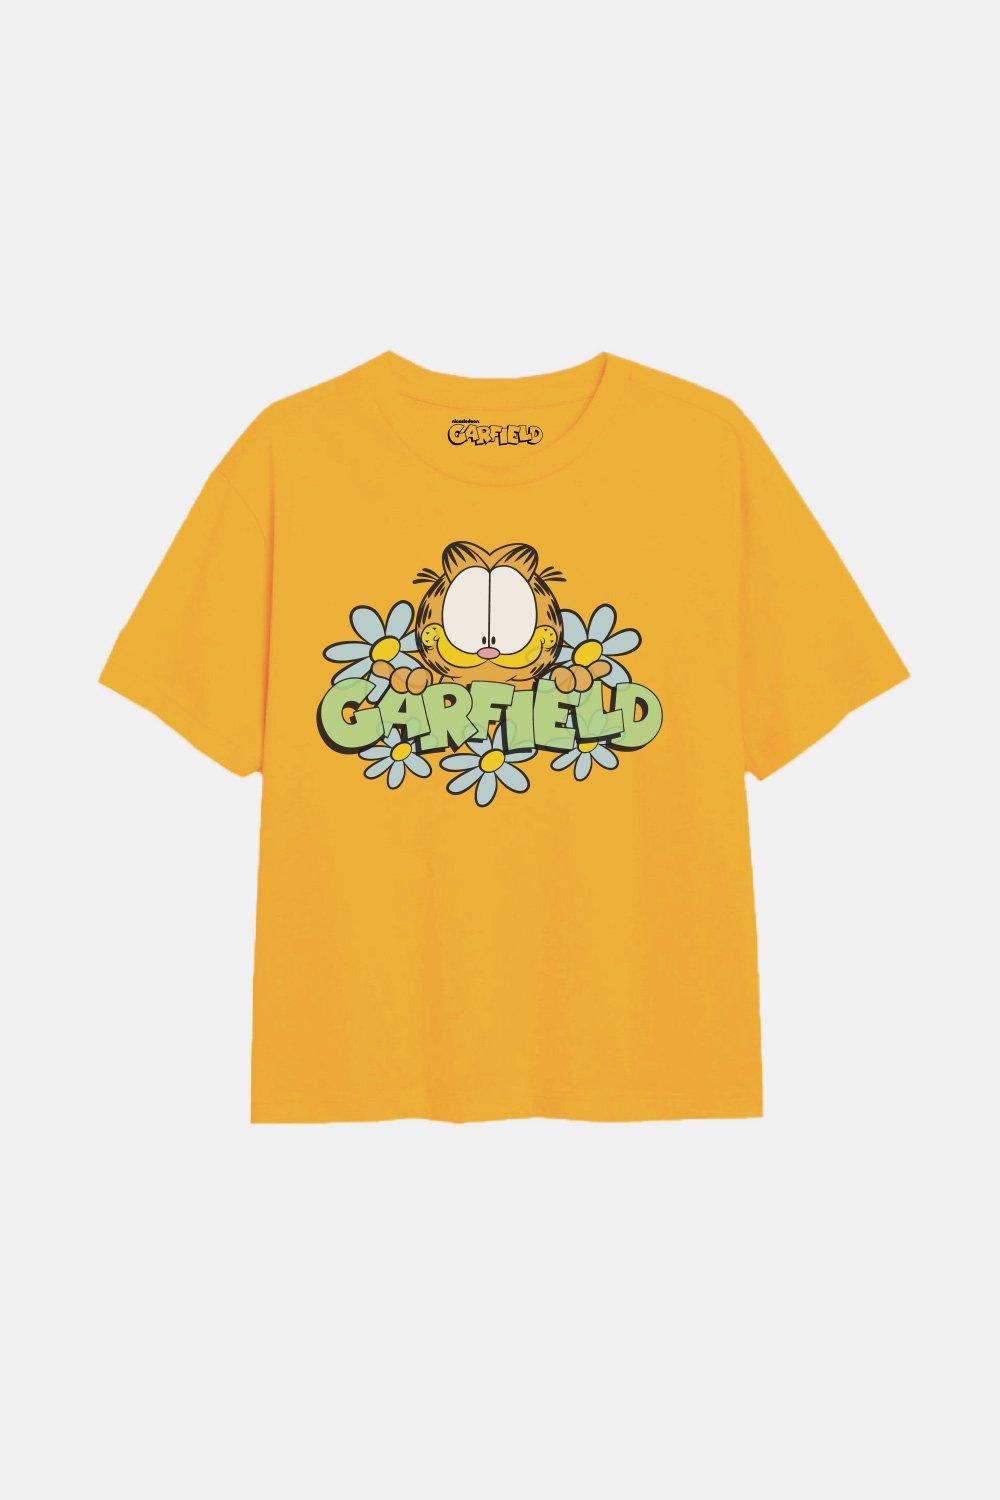 Футболка для девочек Flower Power Garfield, желтый гарфилд суперраскраска что любит гарфилд